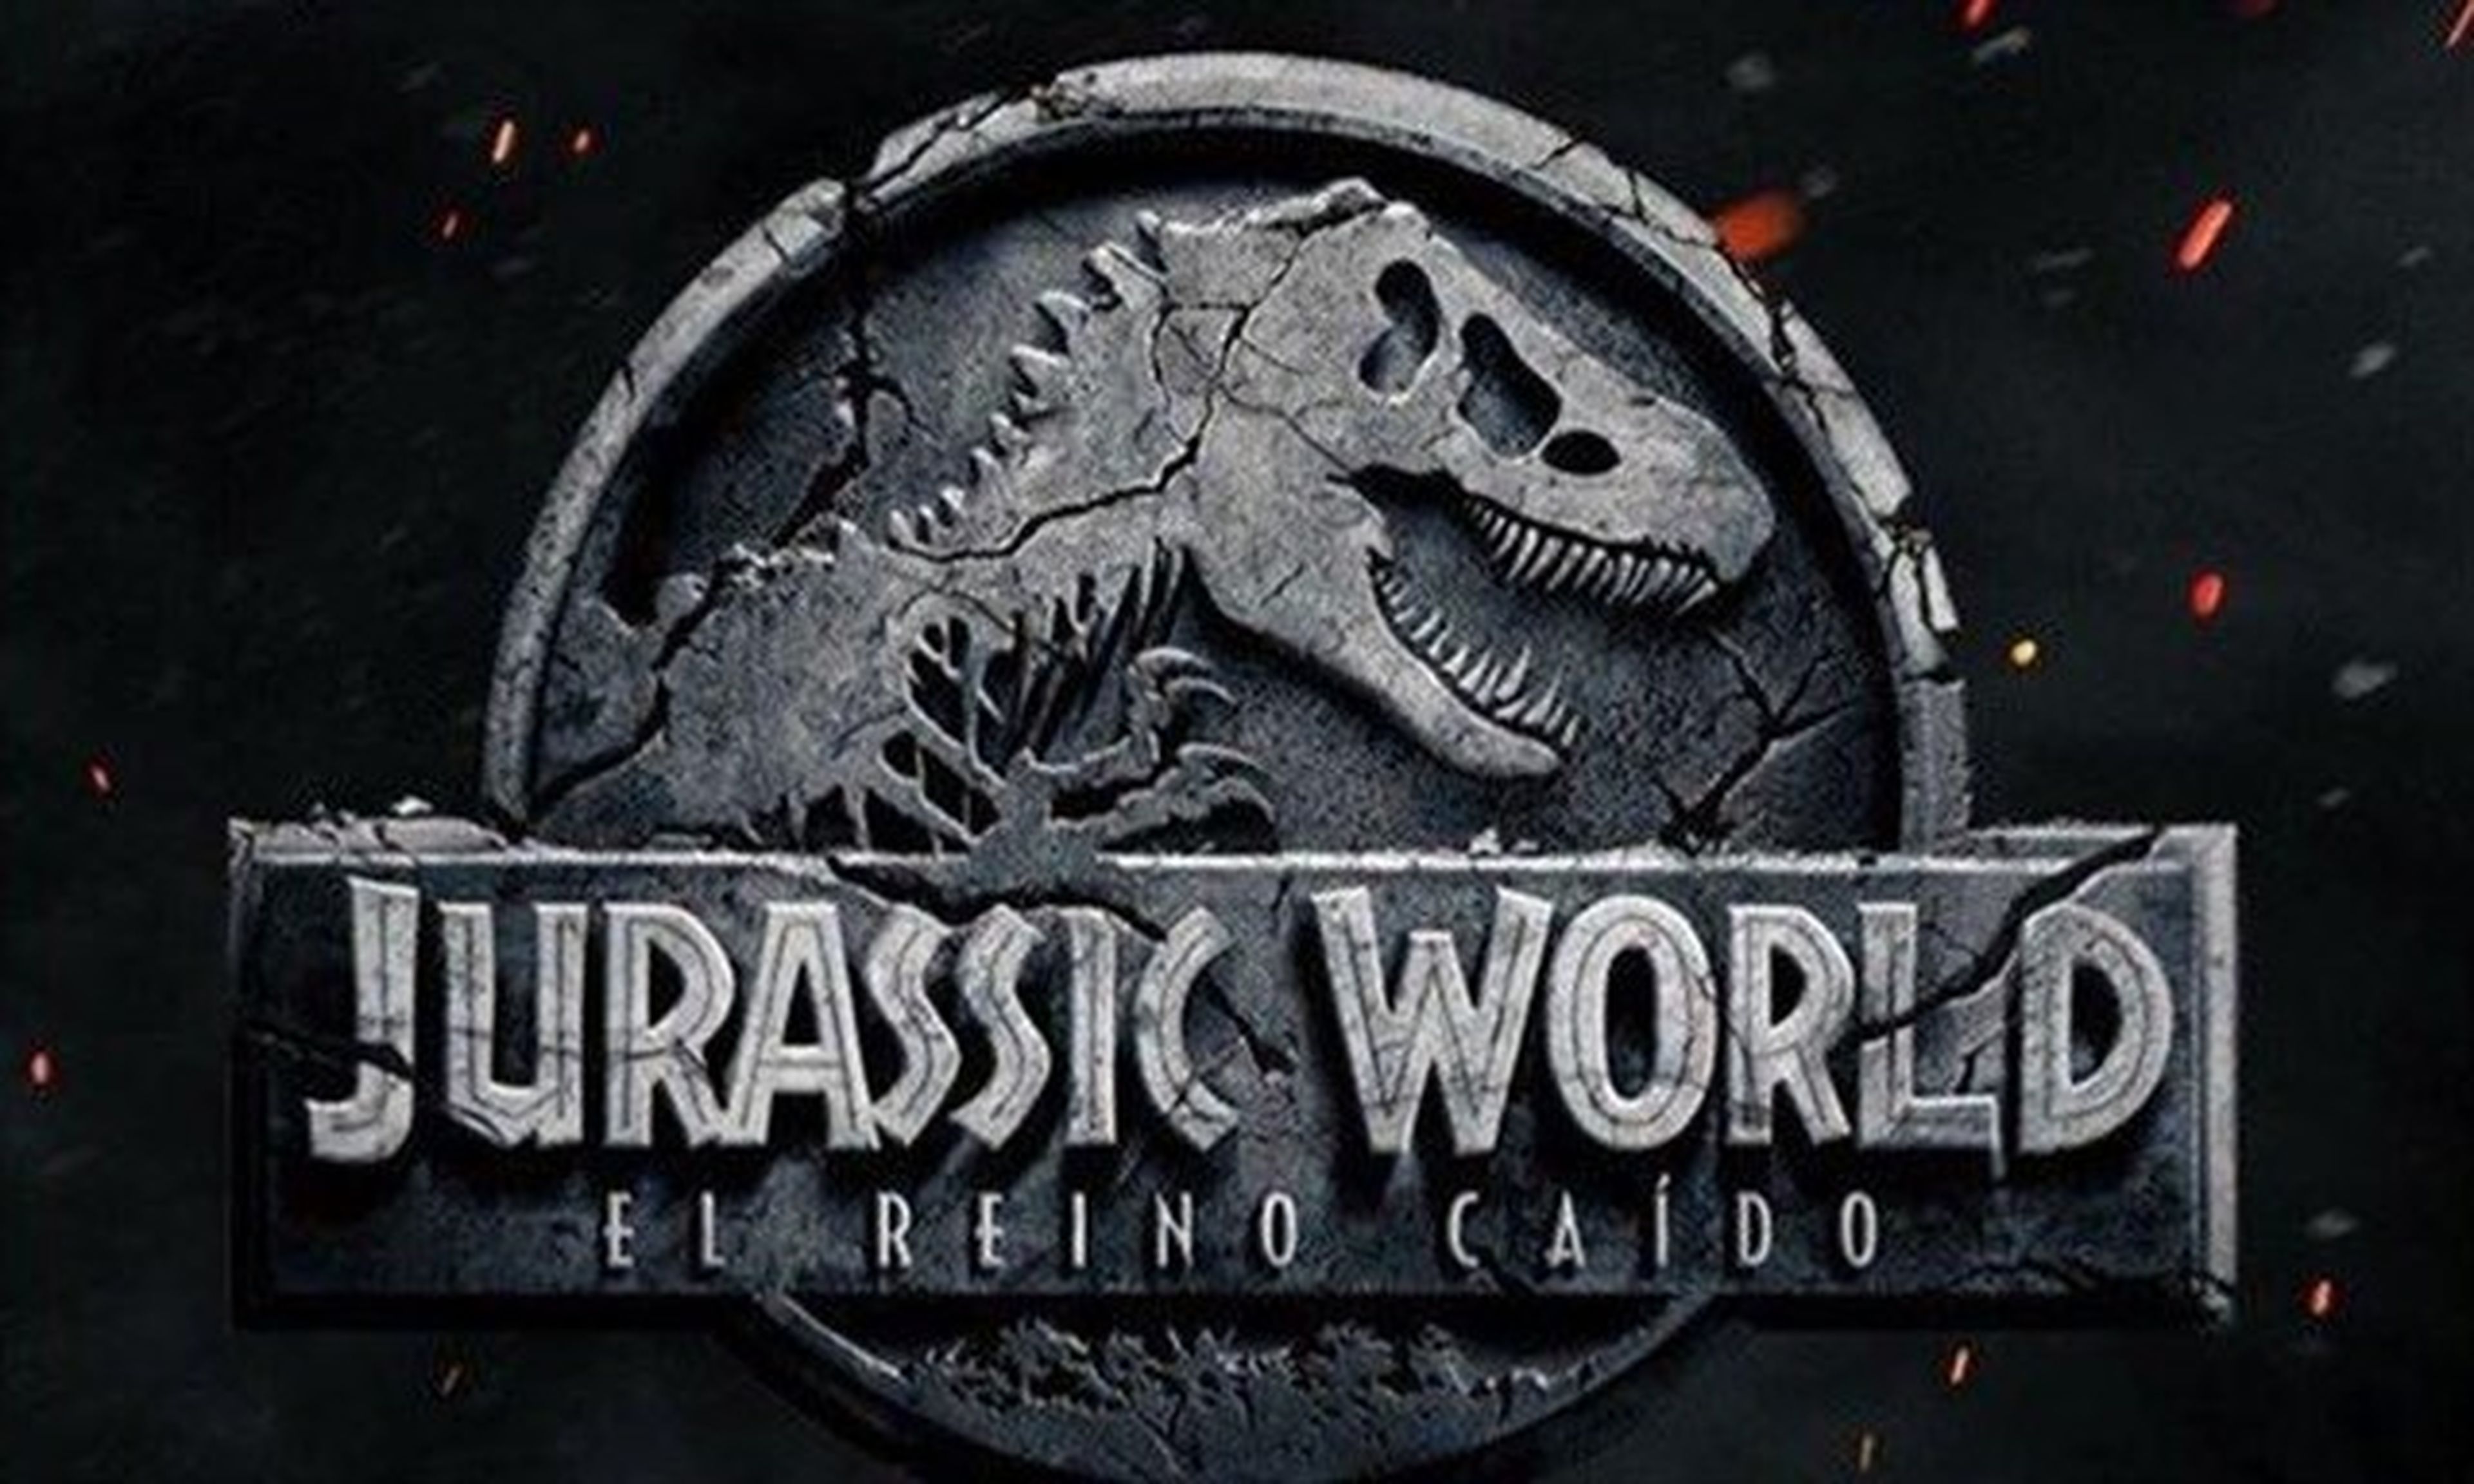 Jurassic World El reino caído